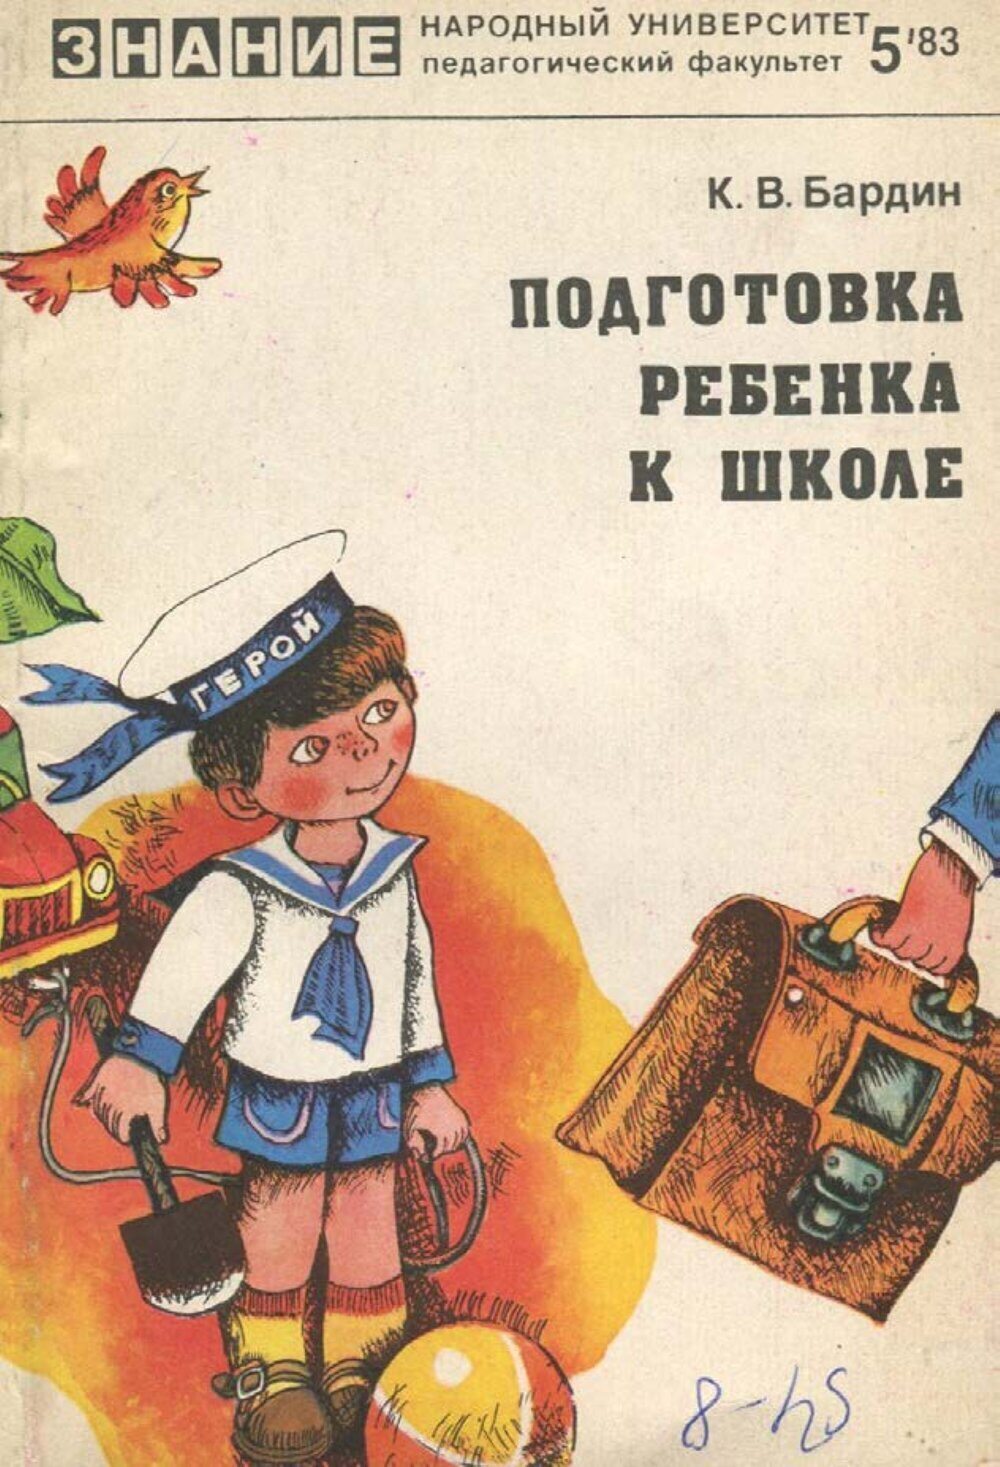 Обложка книги "Подготовка ребенка к школе"